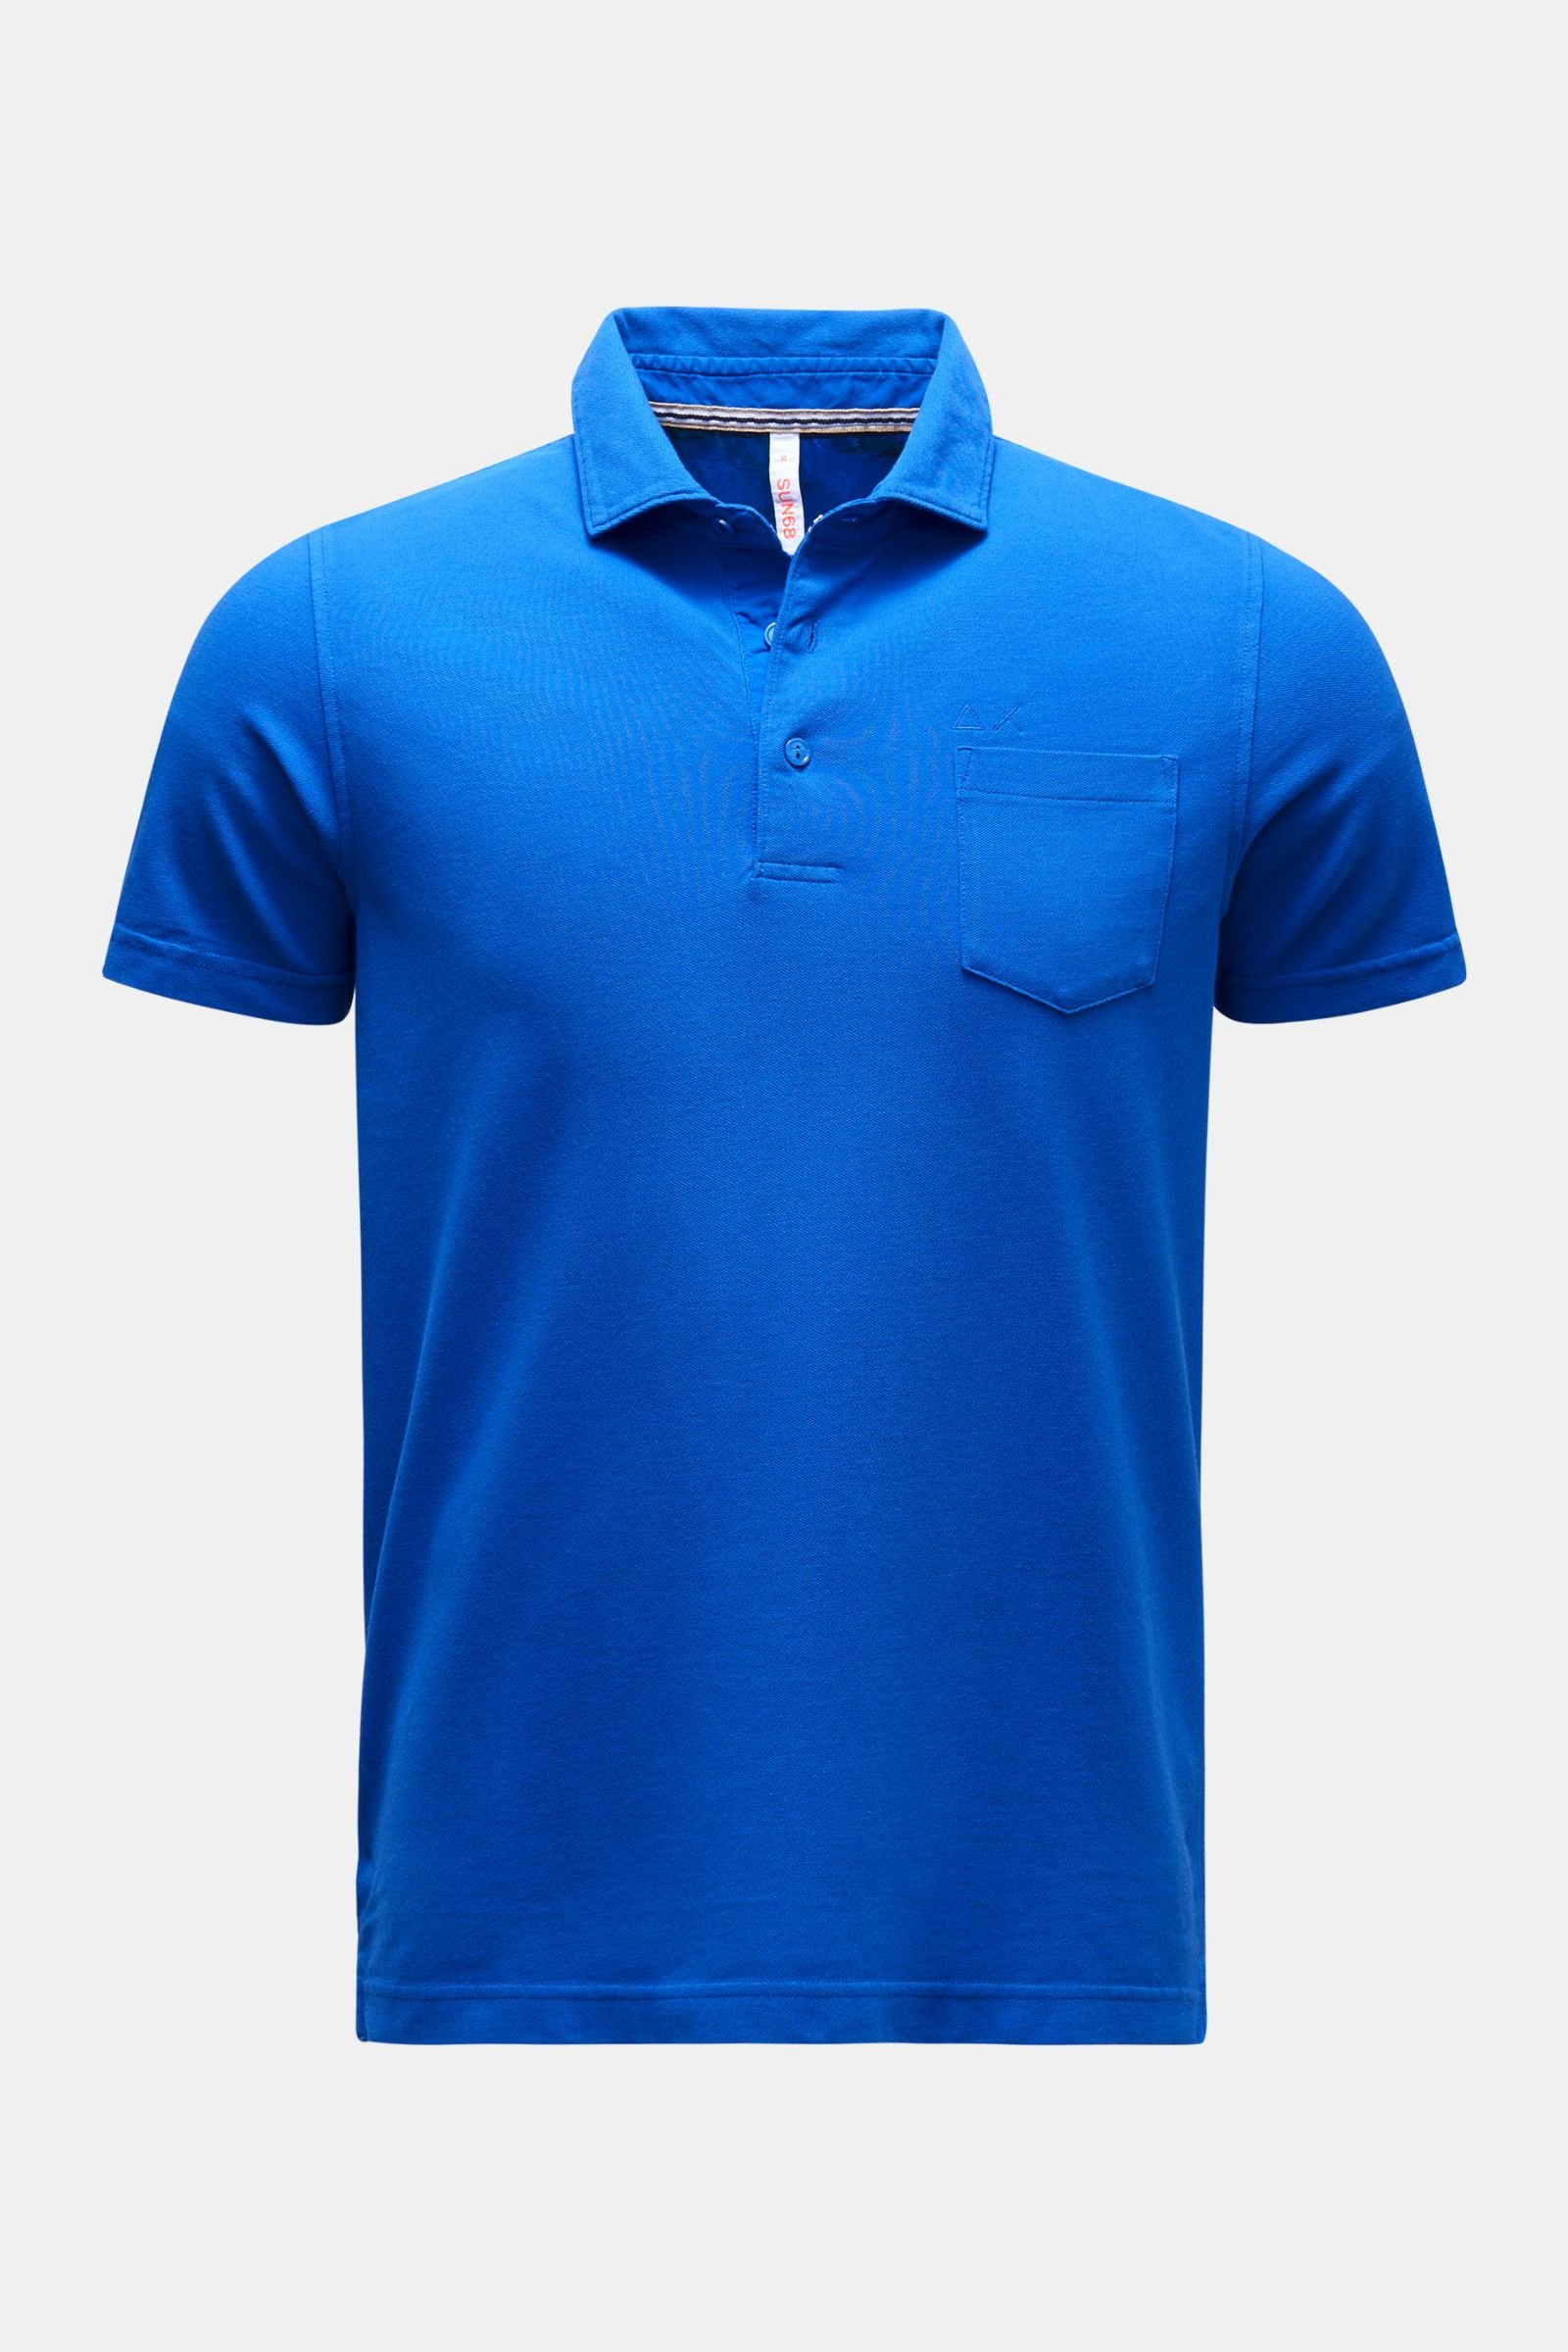 Polo shirt blue